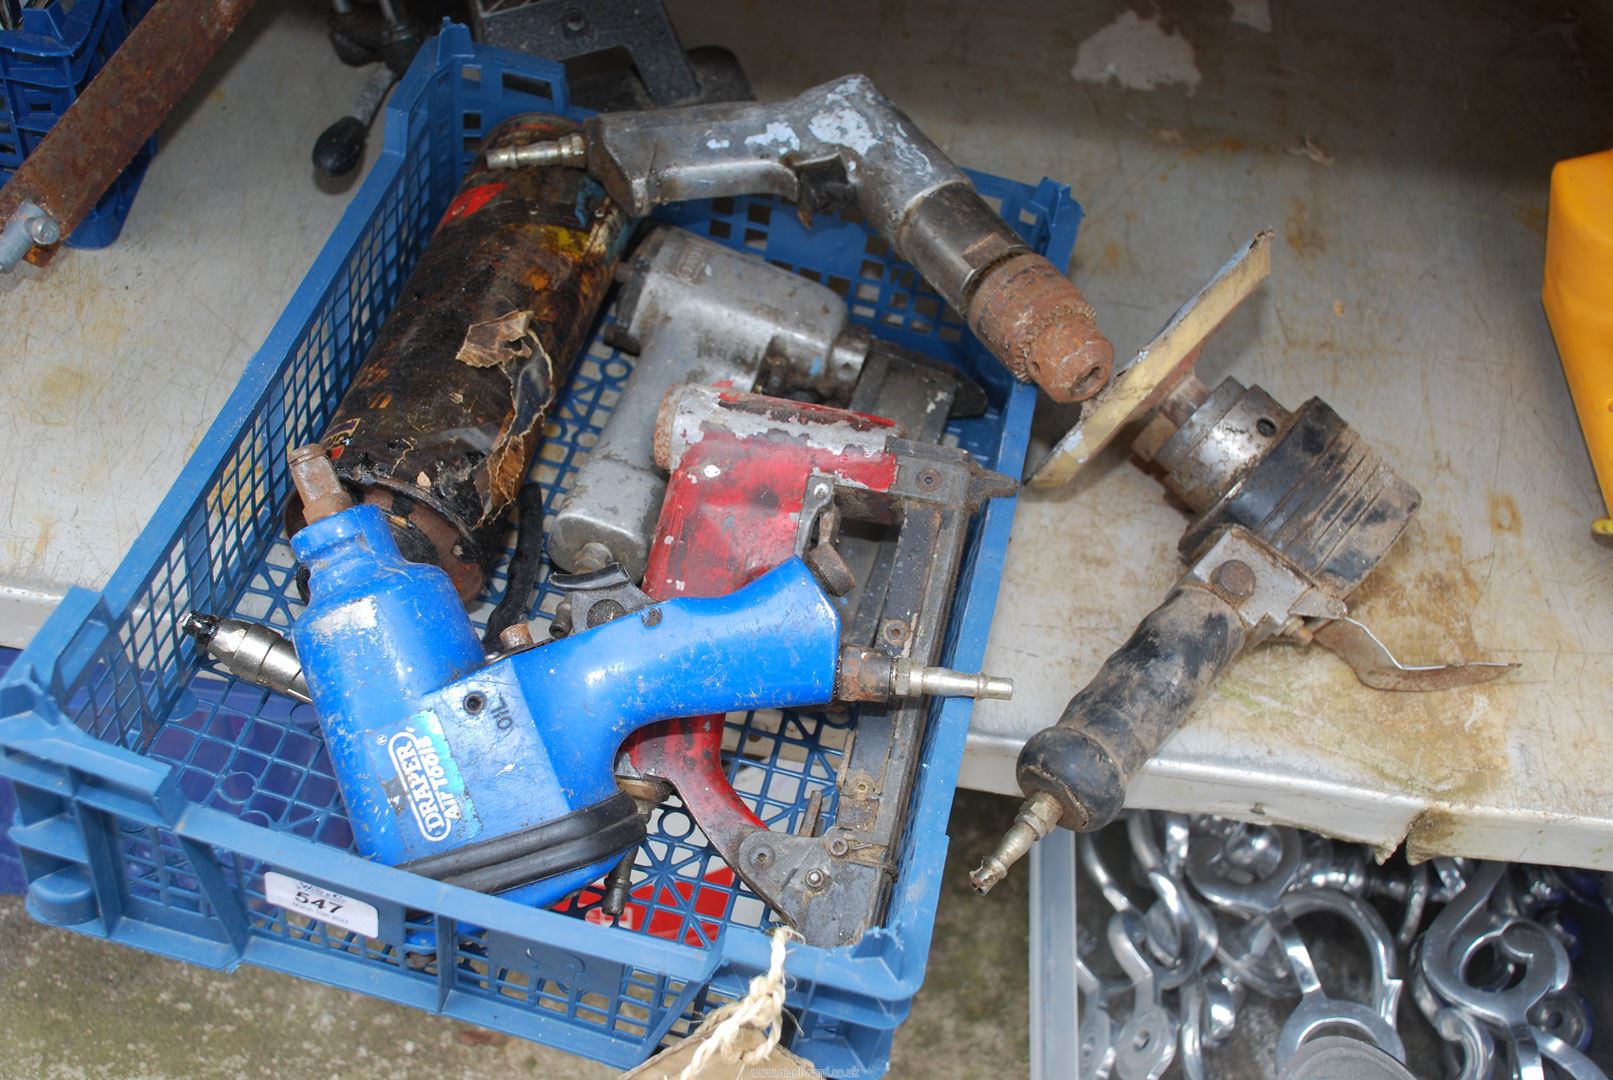 Plastic box of Draper impact wrench, orbital sander, air drill and staple gun.